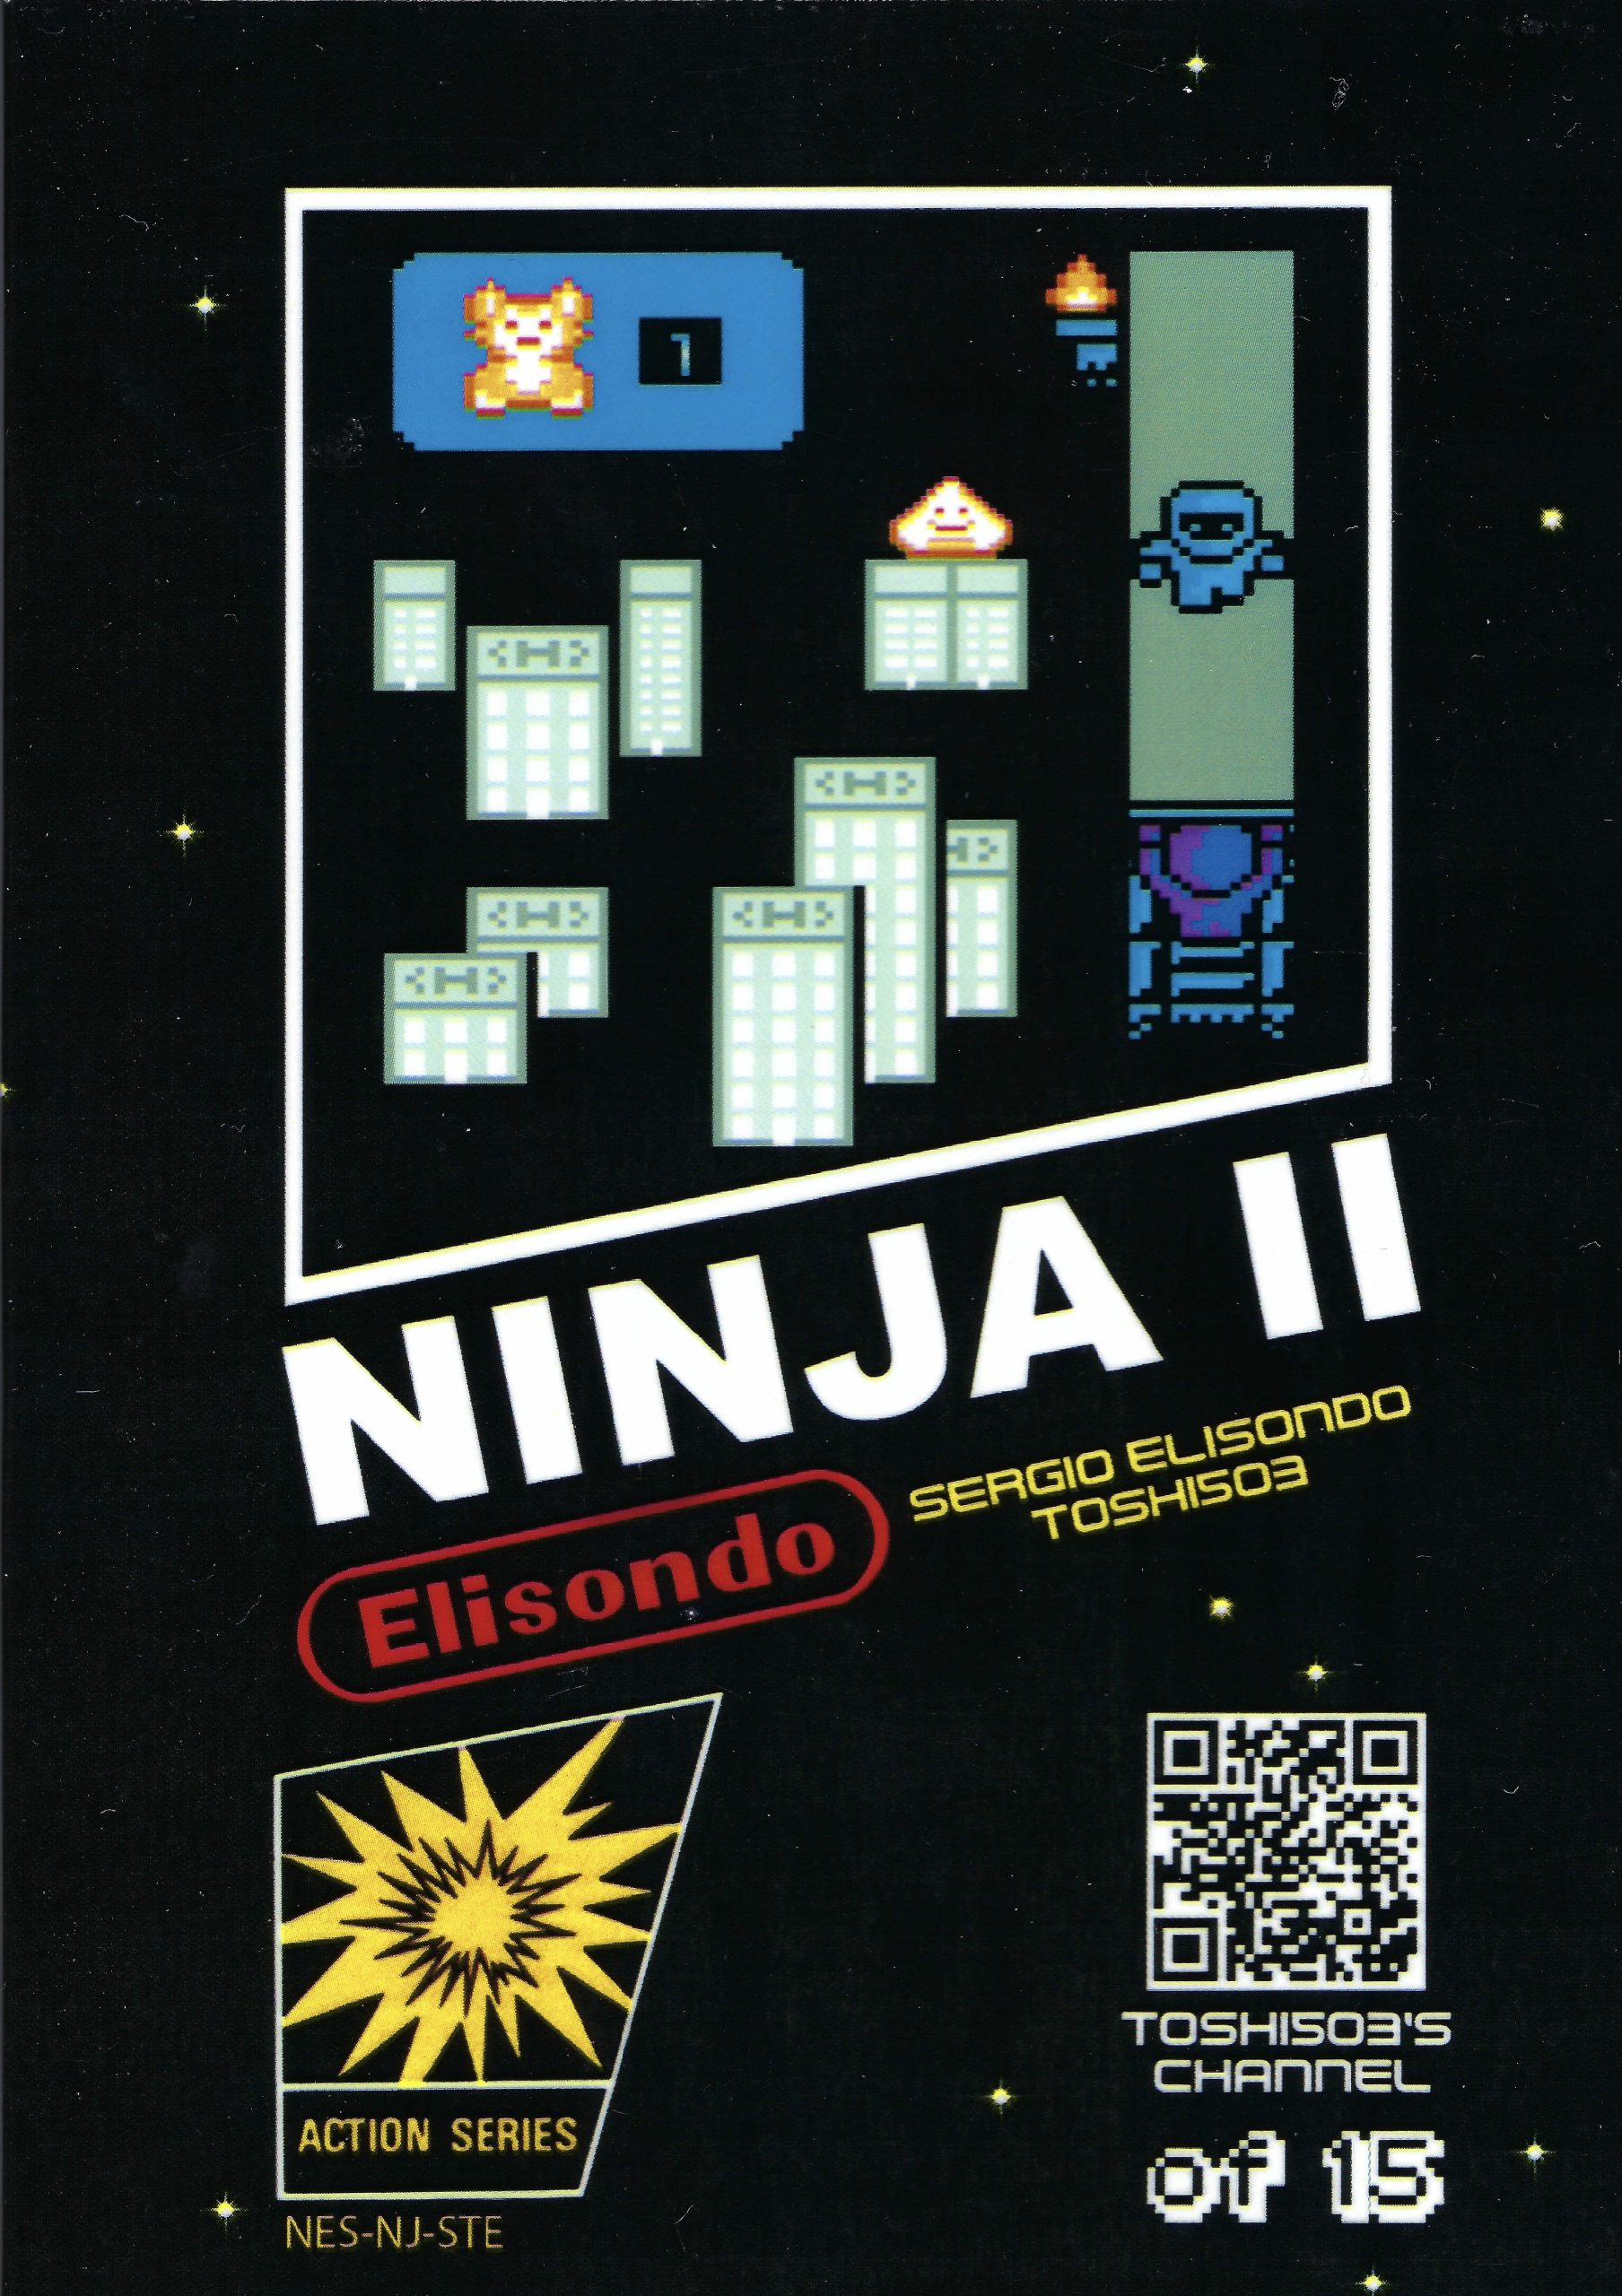 Ninja II